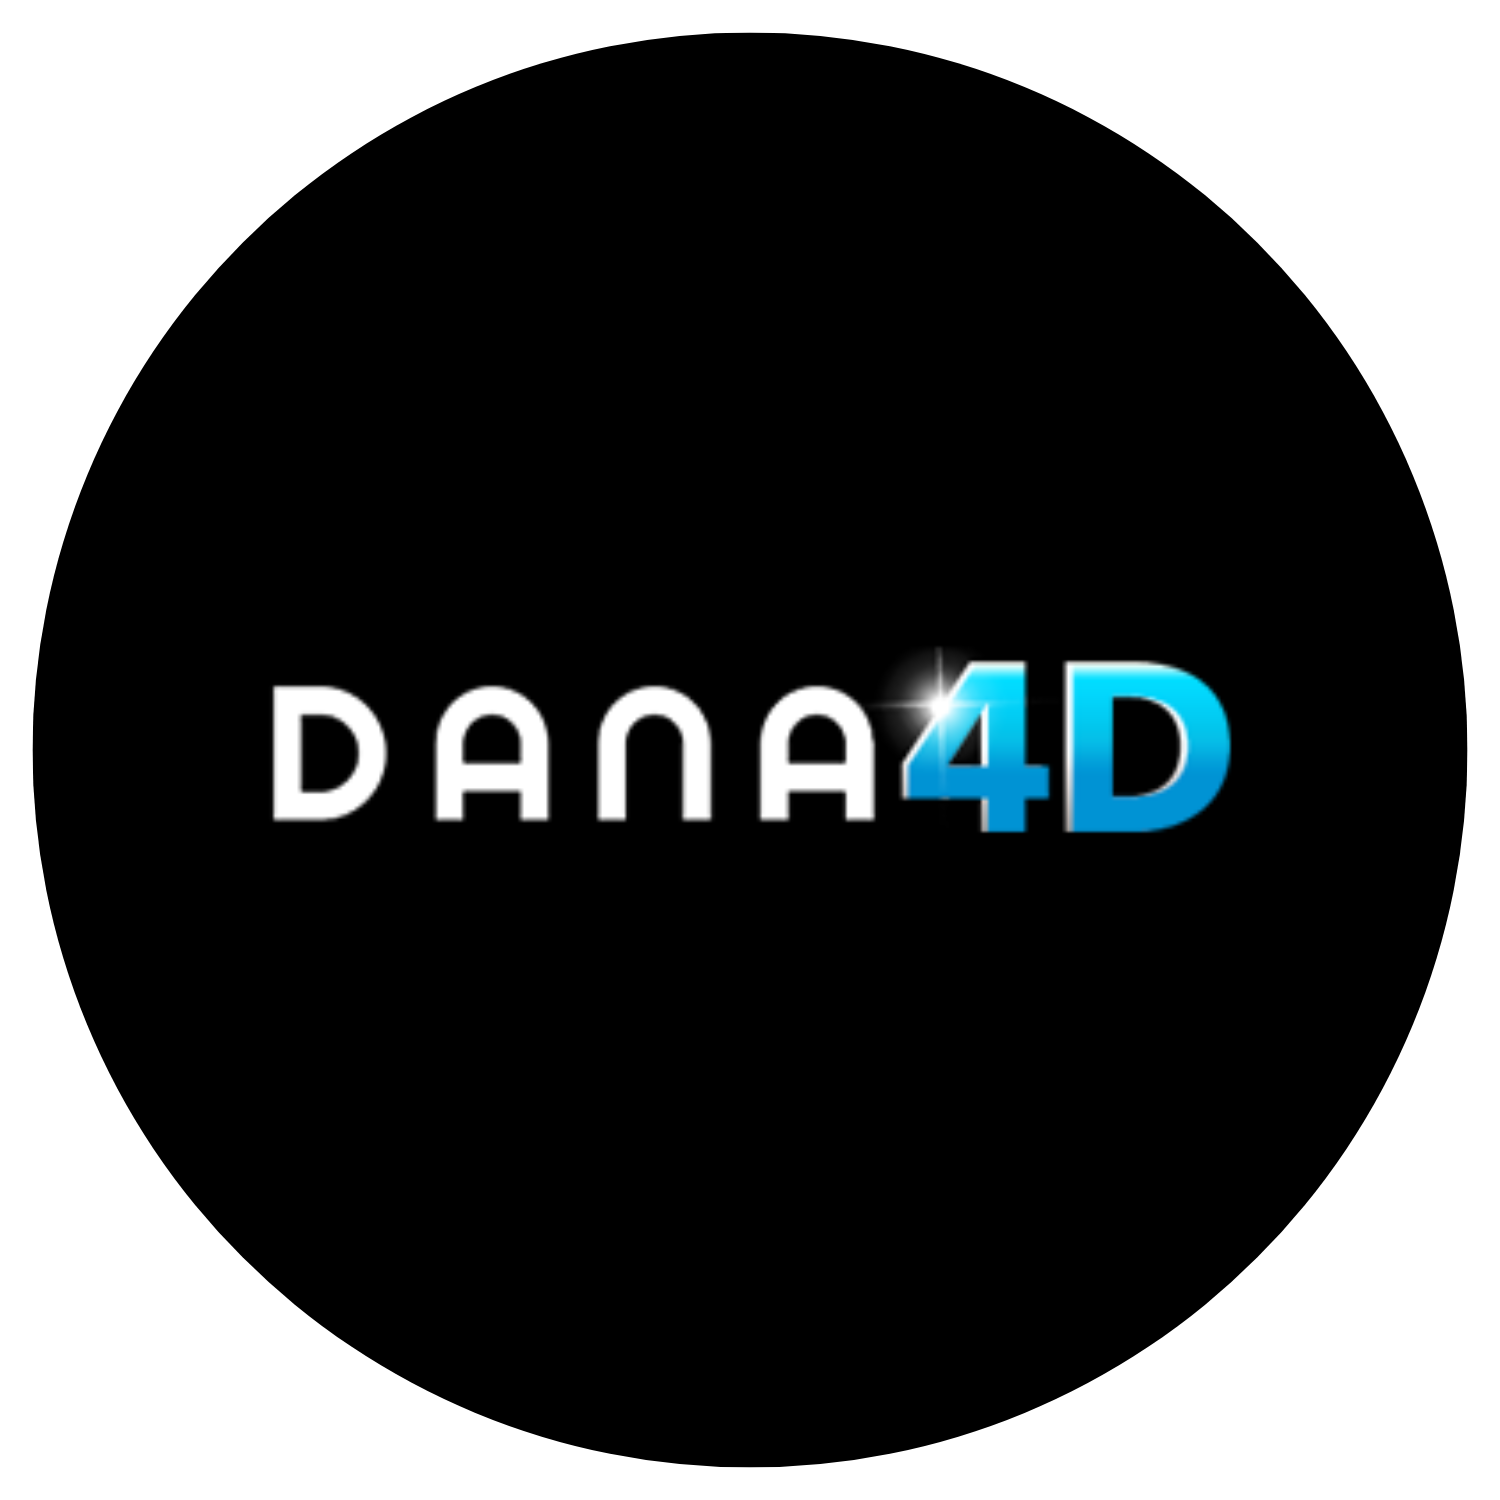 Dana4D